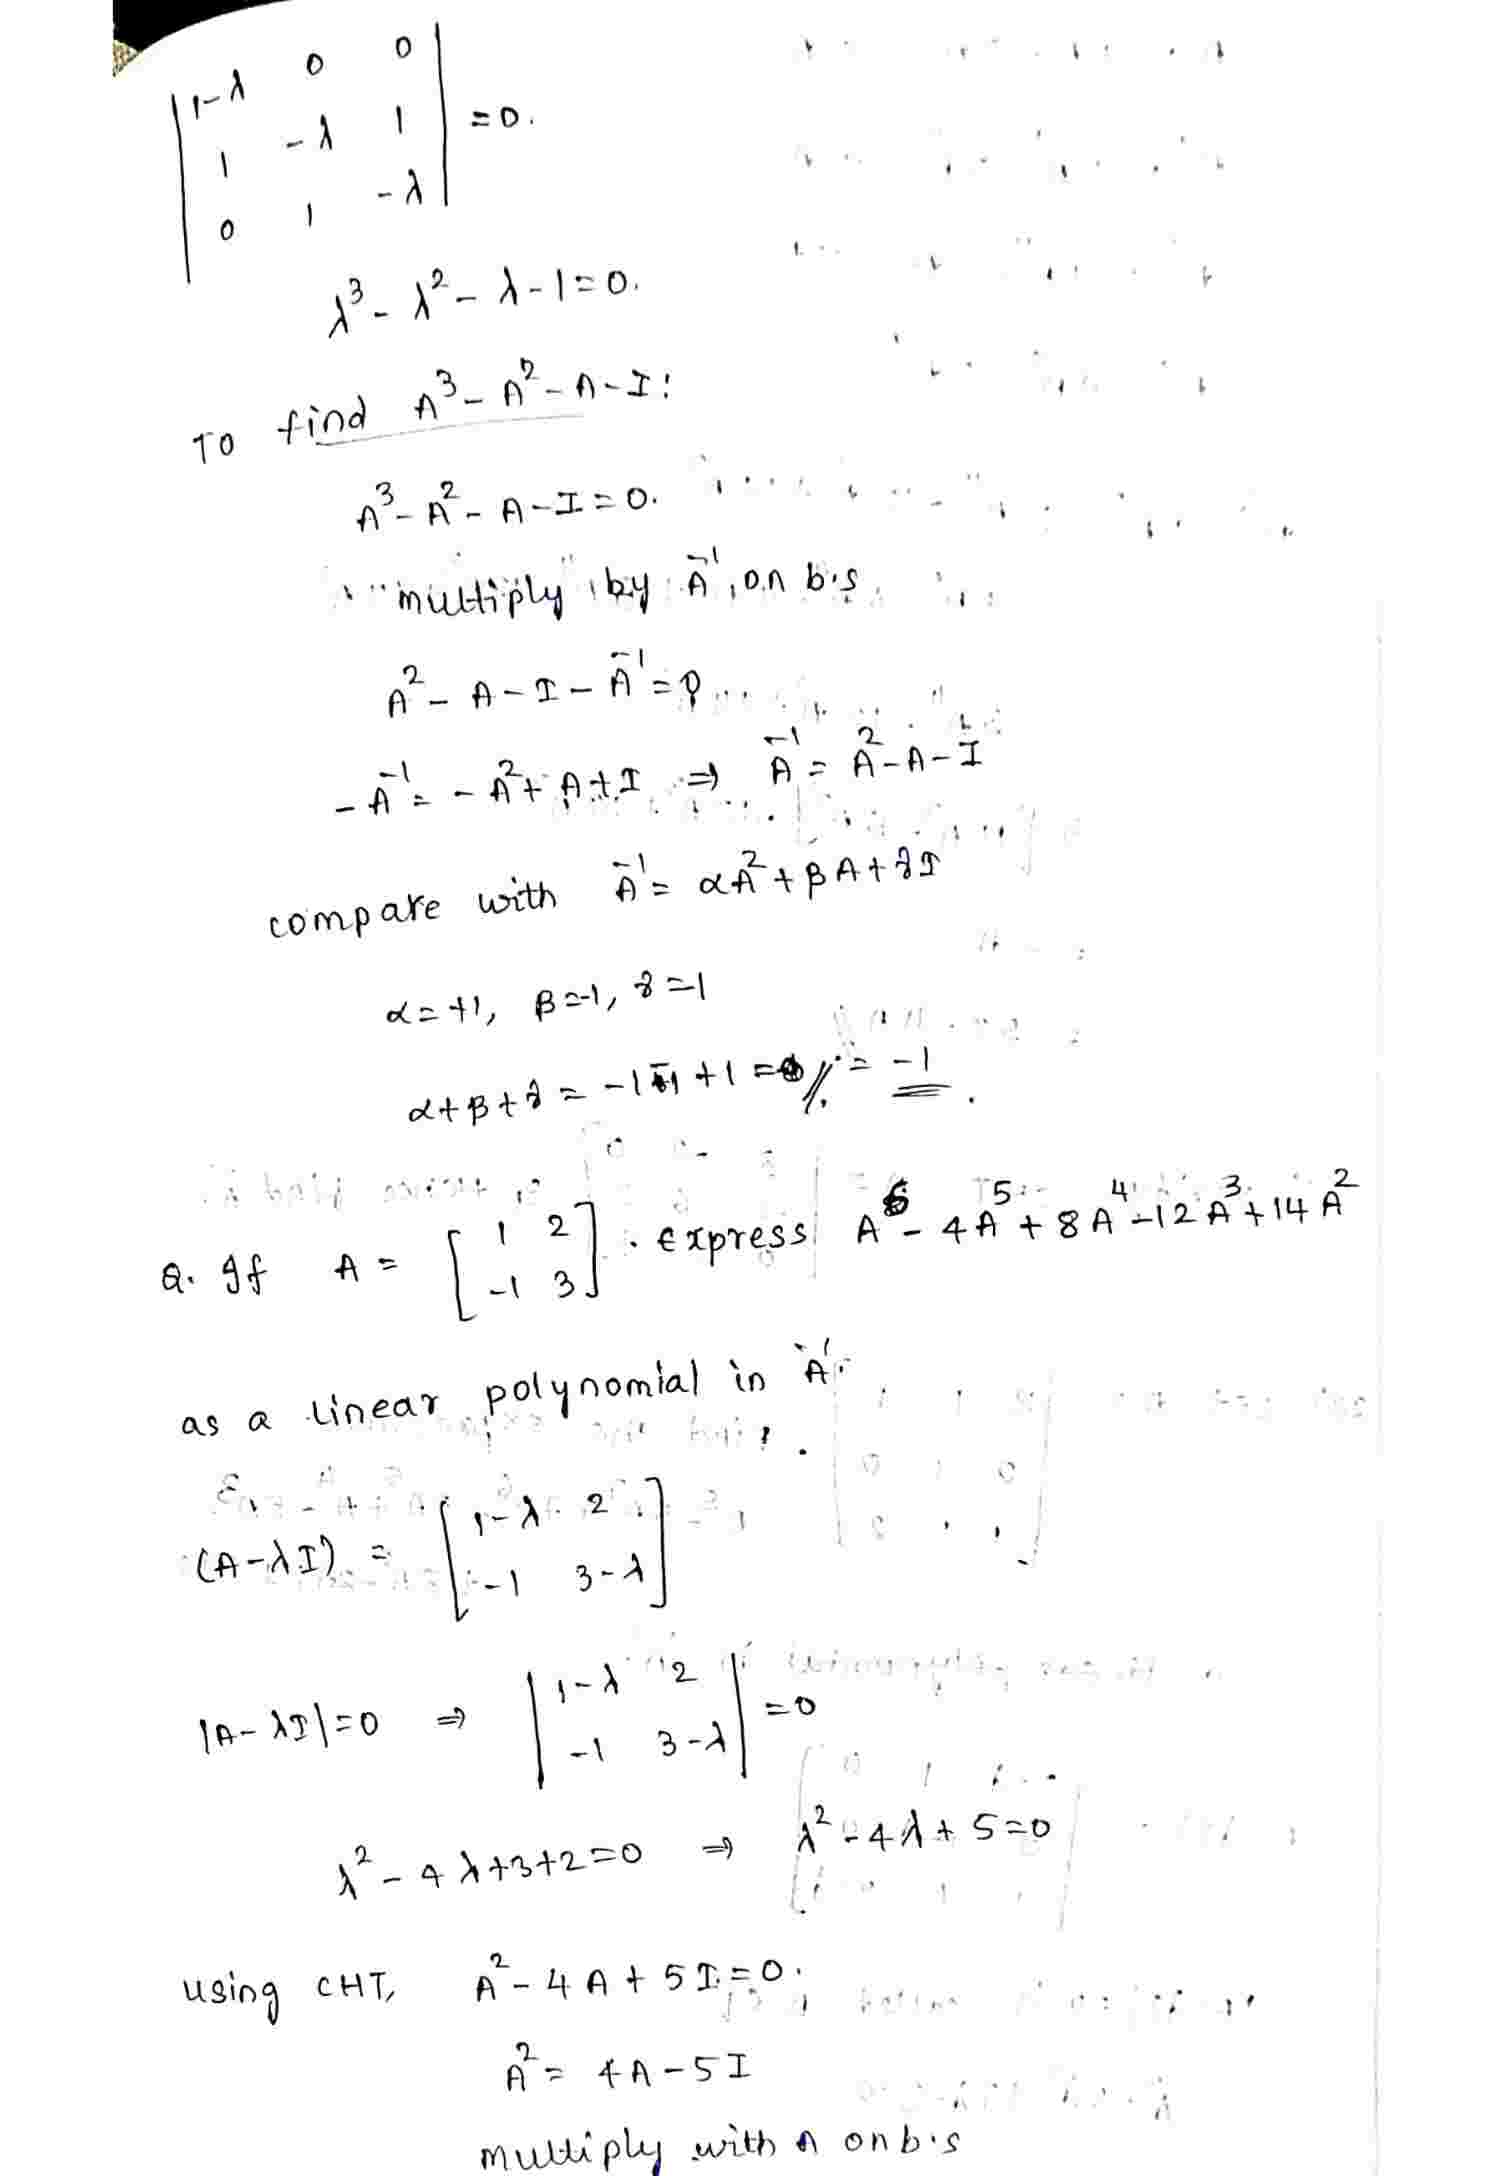 Cayley-Hamilton theorem